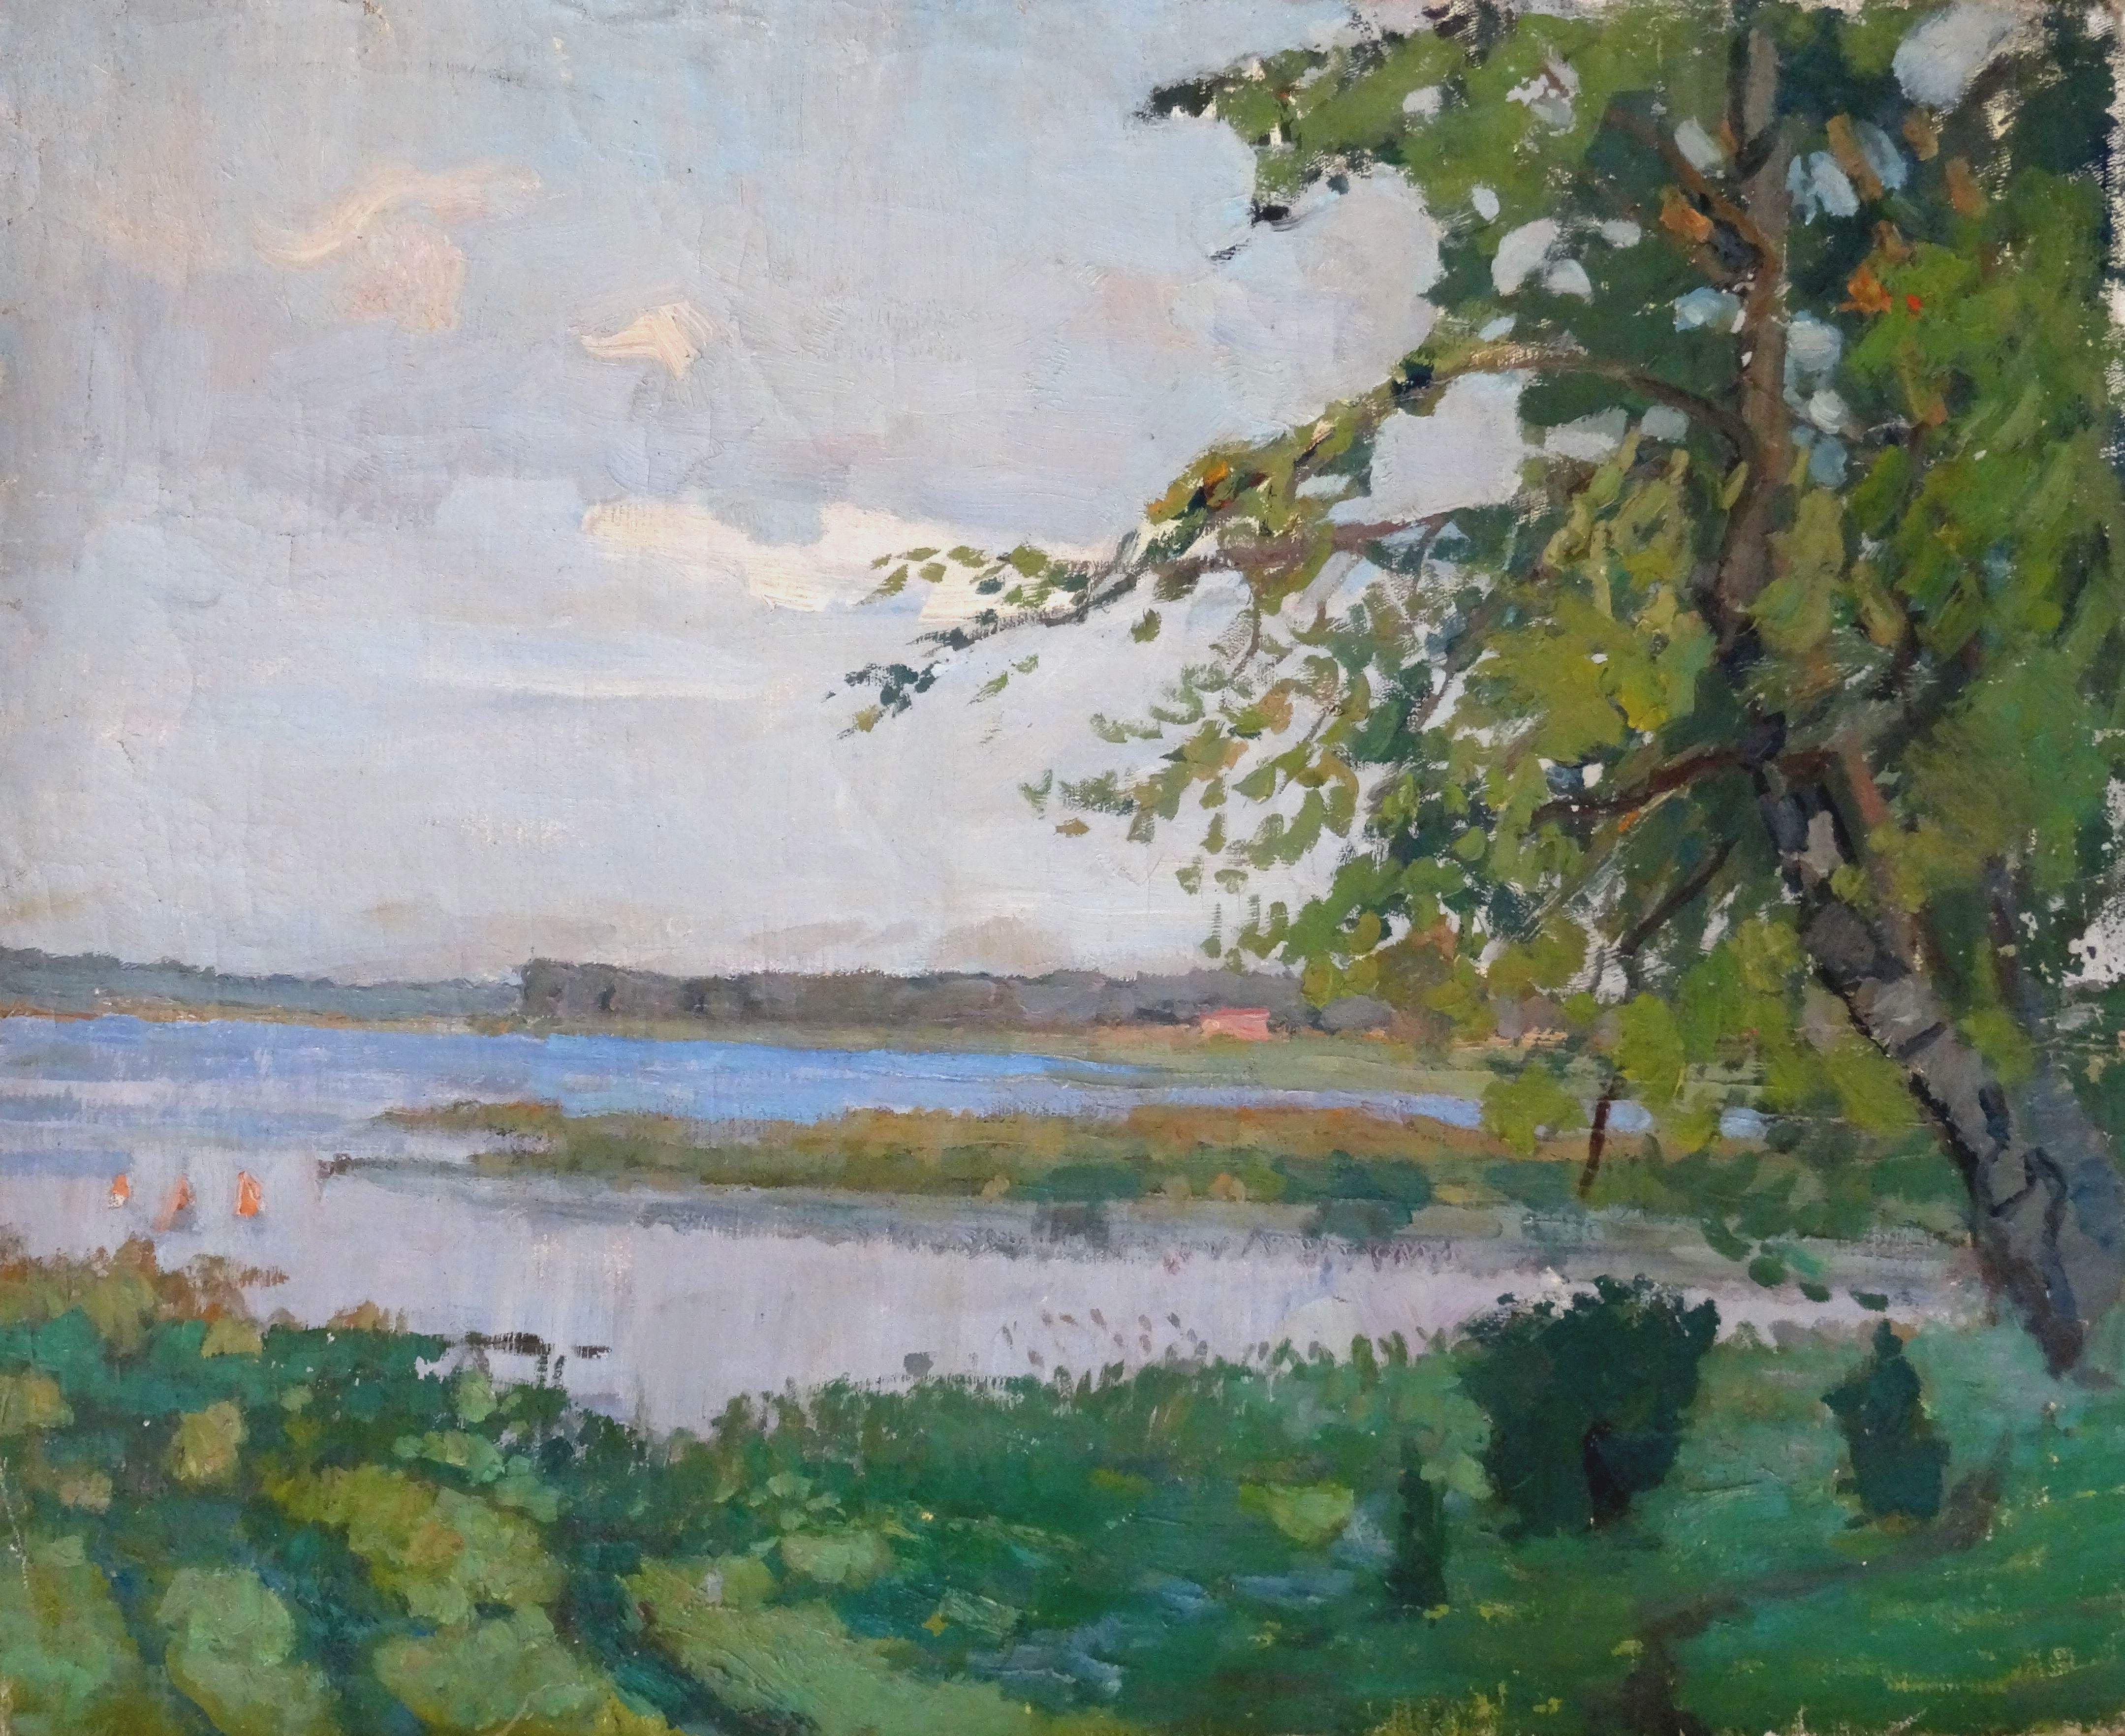 Lake. Oil on canvas, 65x79 cm